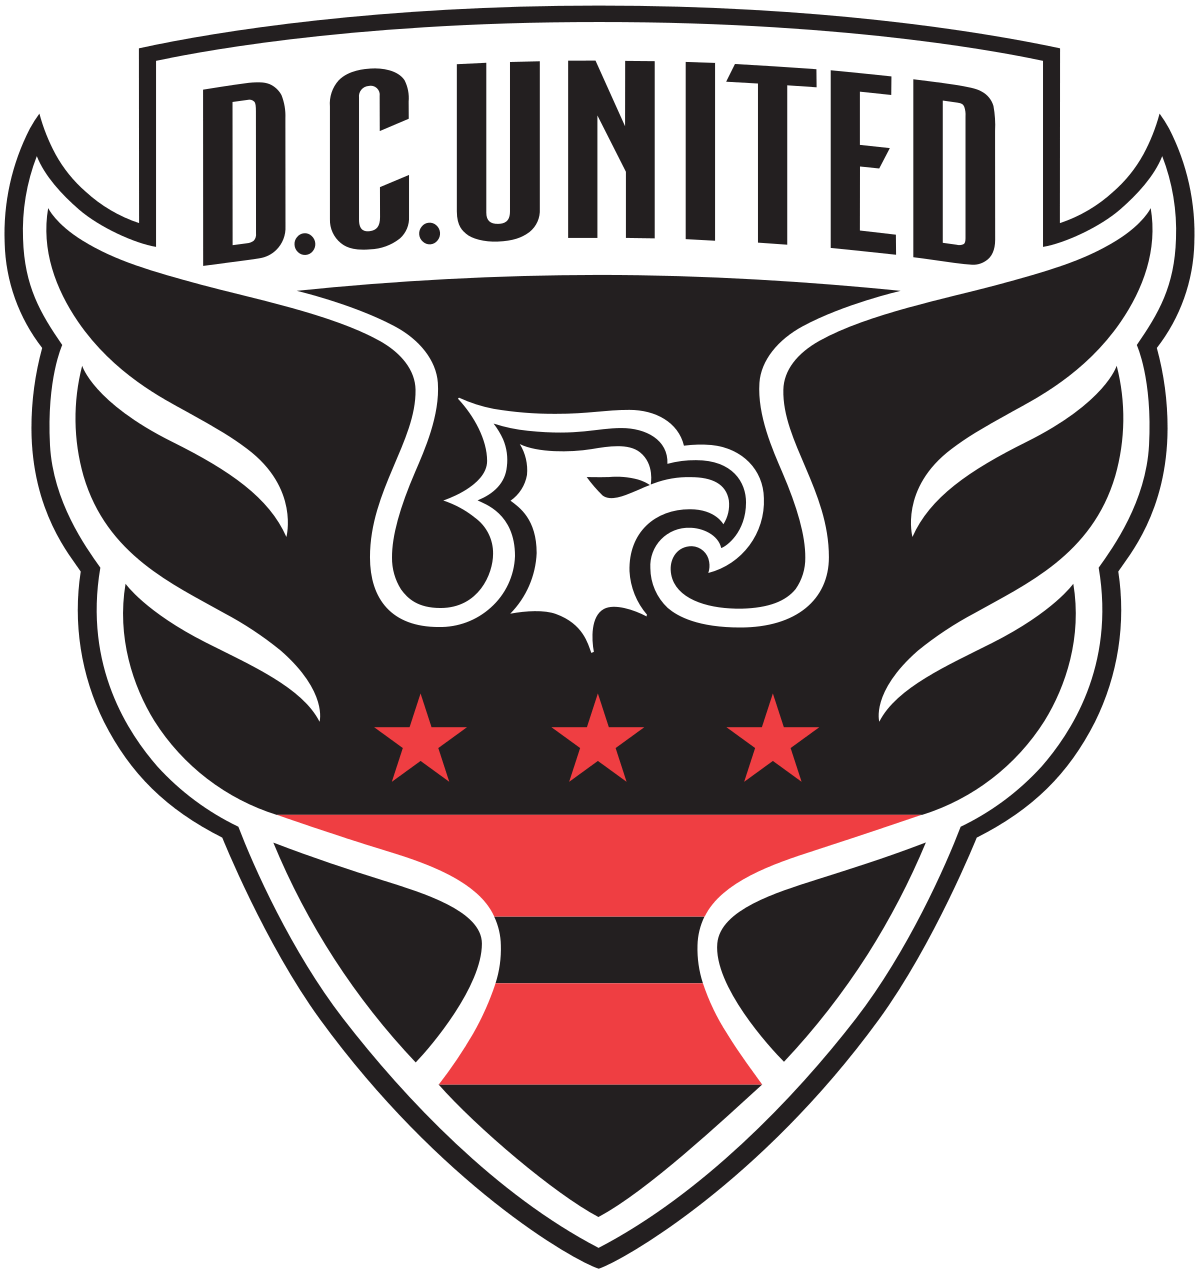 Soccer Team Shield Logo - D.C. United